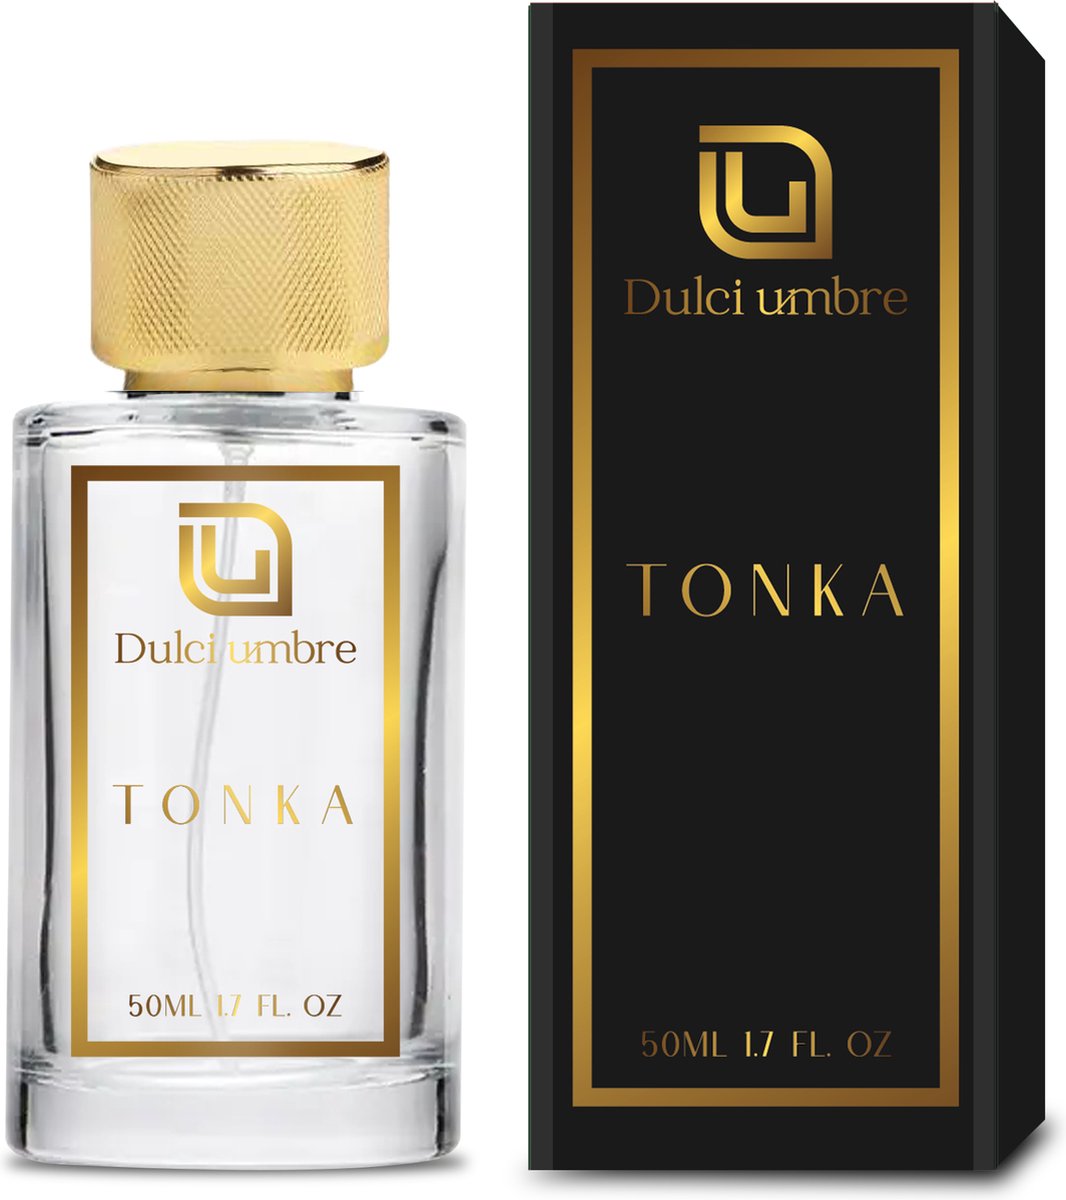 DulciUmbre - Tonka - 50ml - Extrait de Parfum